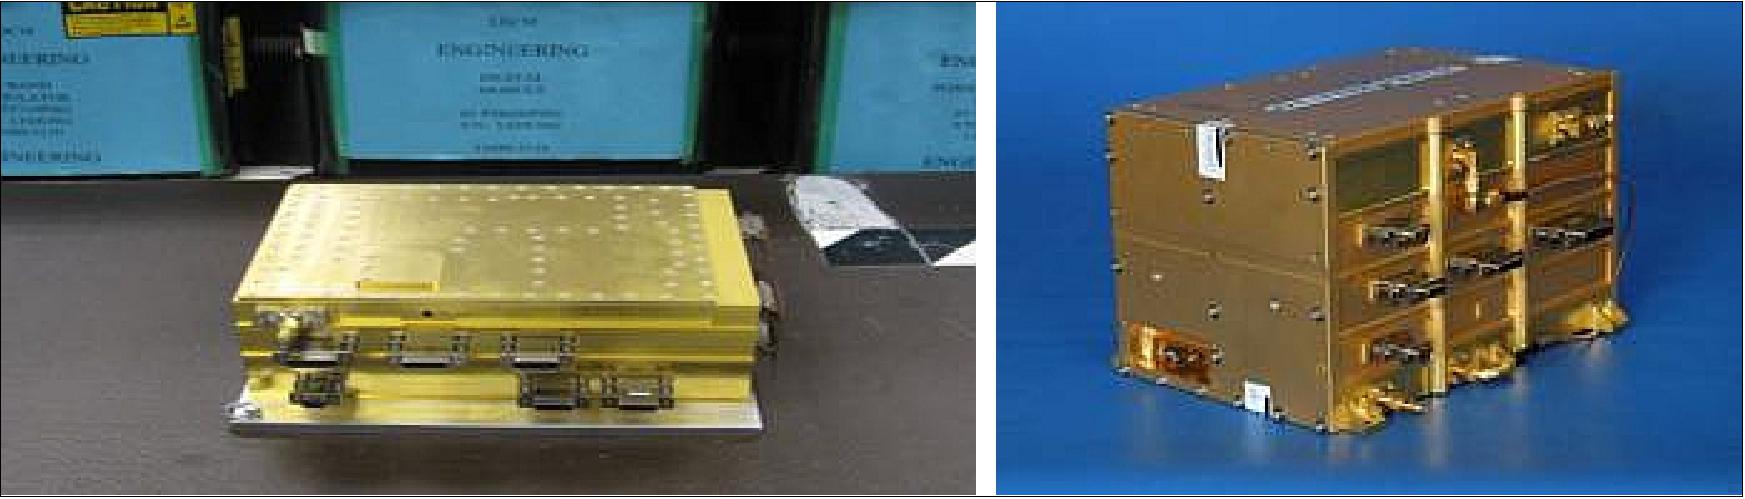 Figure 8: Photo of the EM X-band transponder (left) and AMT S-band transponder (right), image credit: NASA